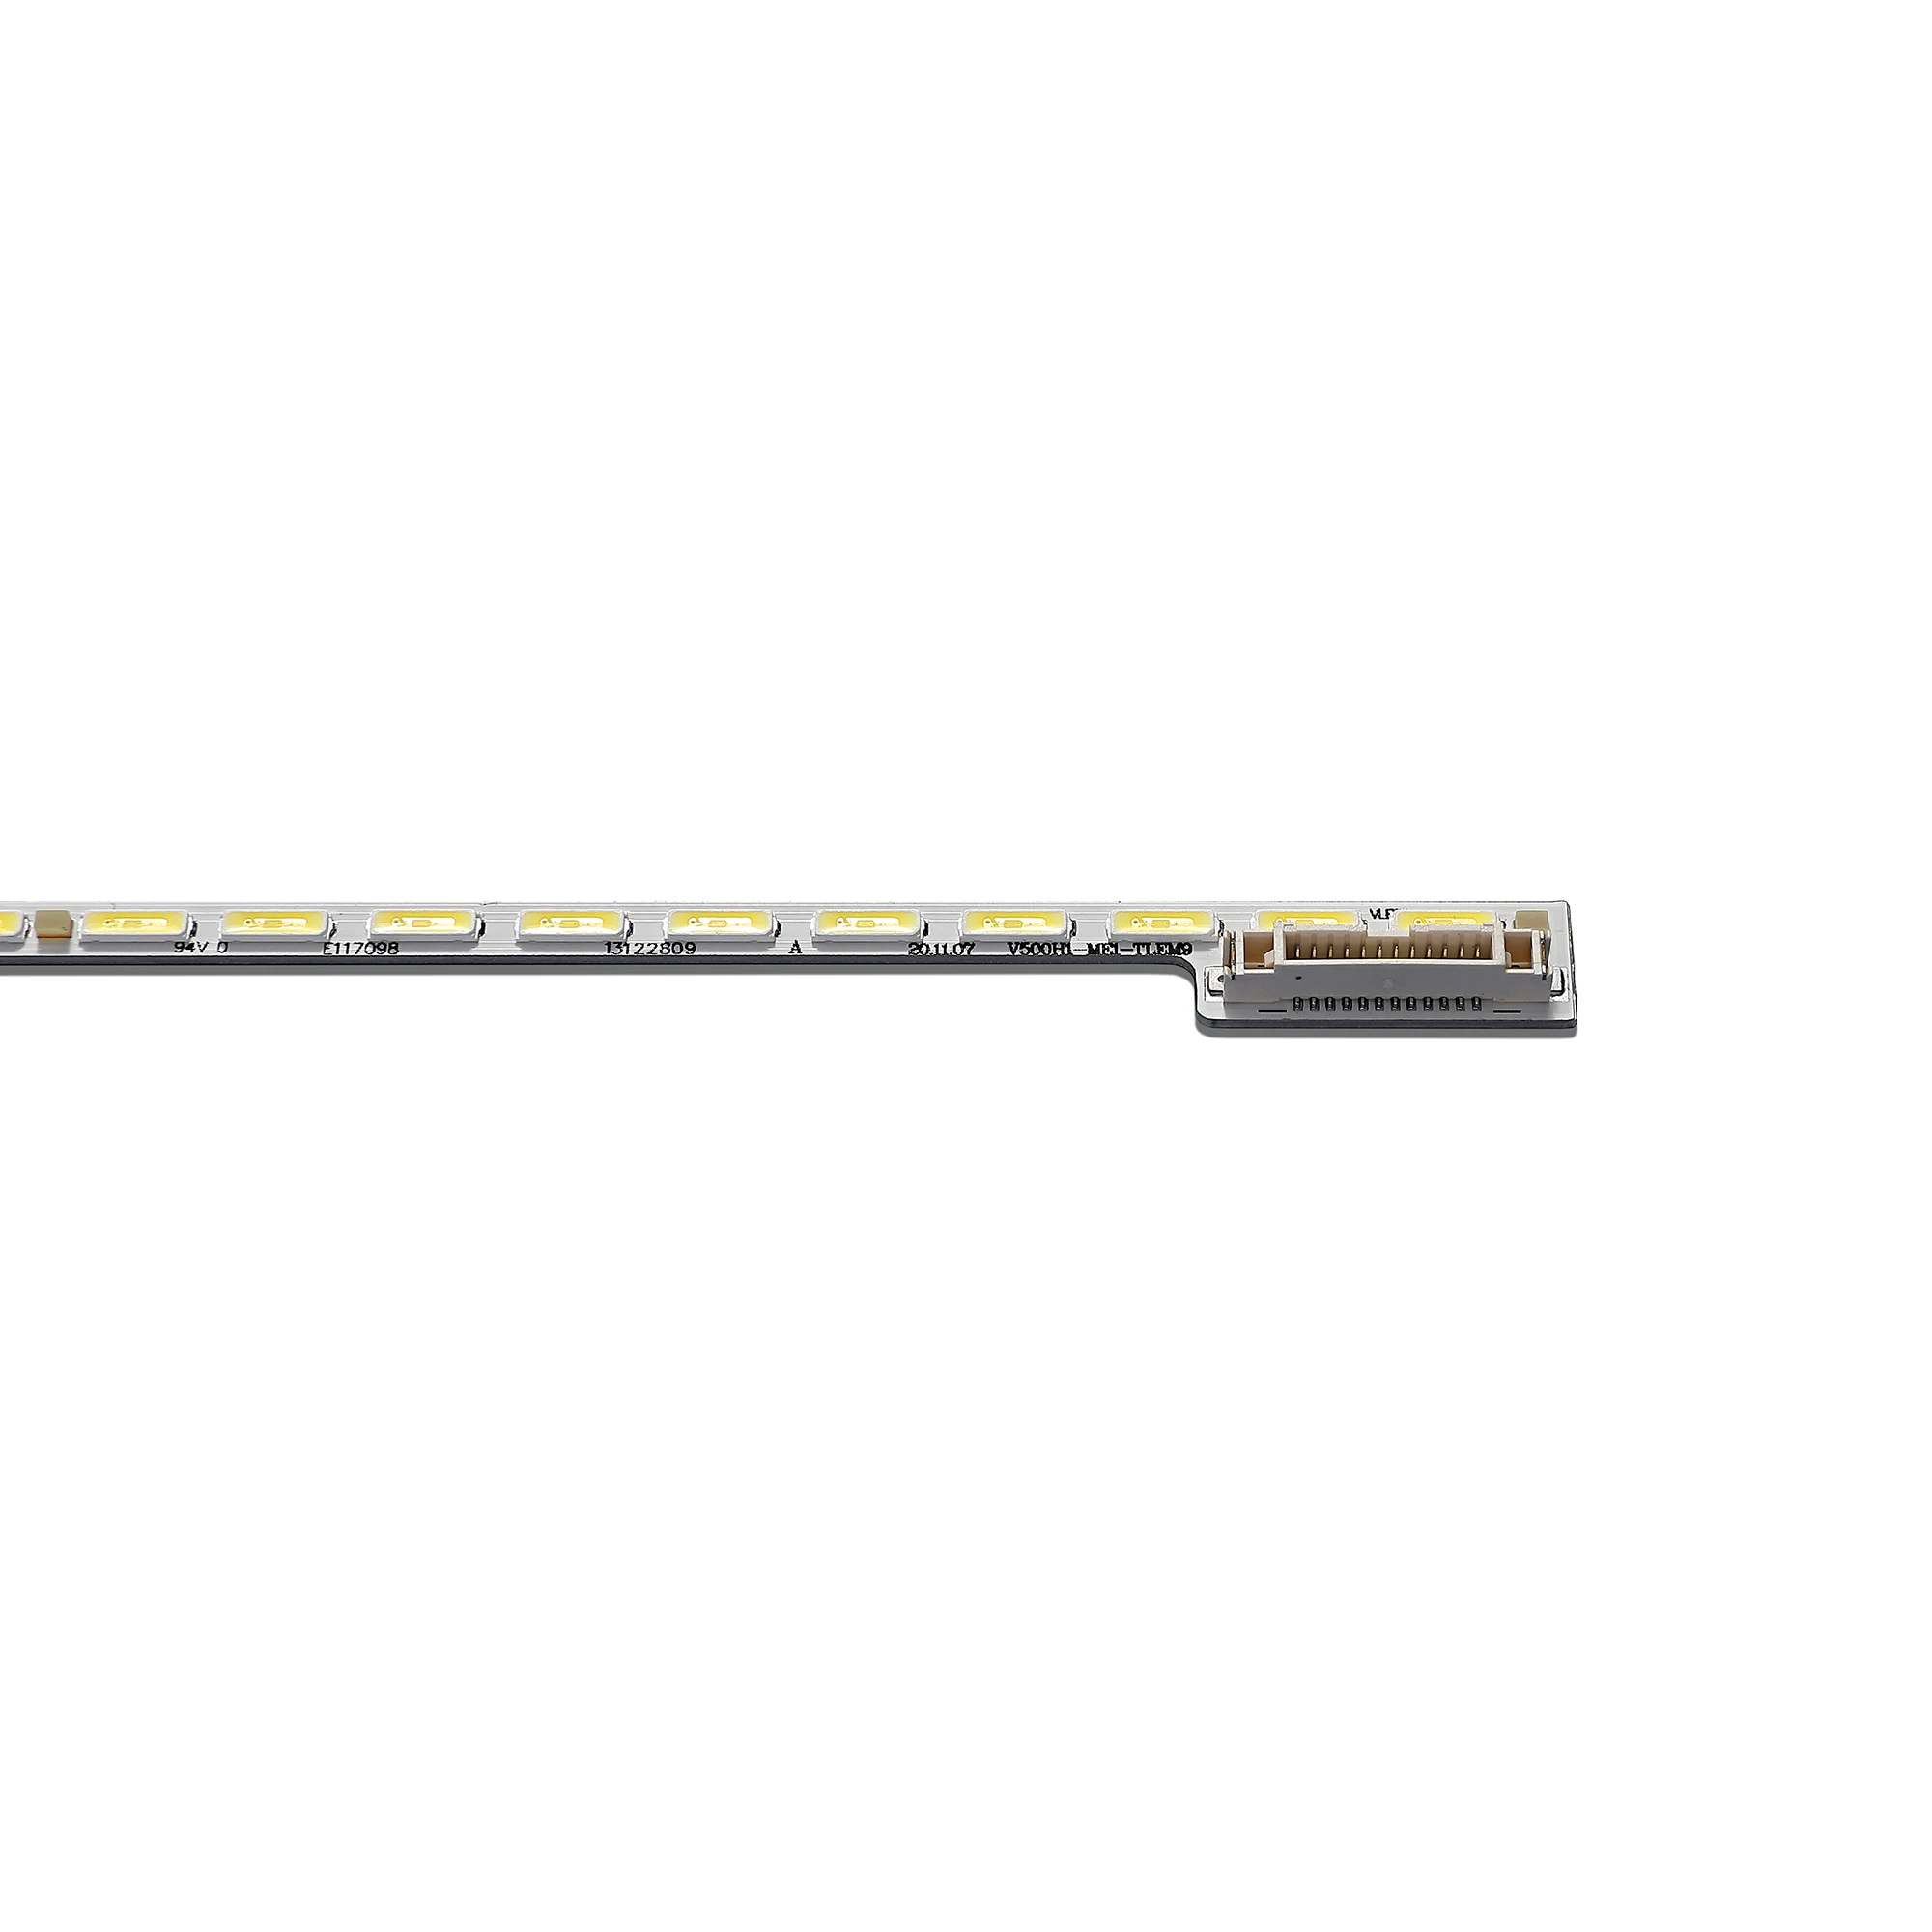 

LED Backlight strip V500HJ1-ME1 V500H1-ME1-TLEM9 for Toshiba LH50DU6000 LE50A5000 D50A710 094620 N31144R0 50E62 IC-50IP800